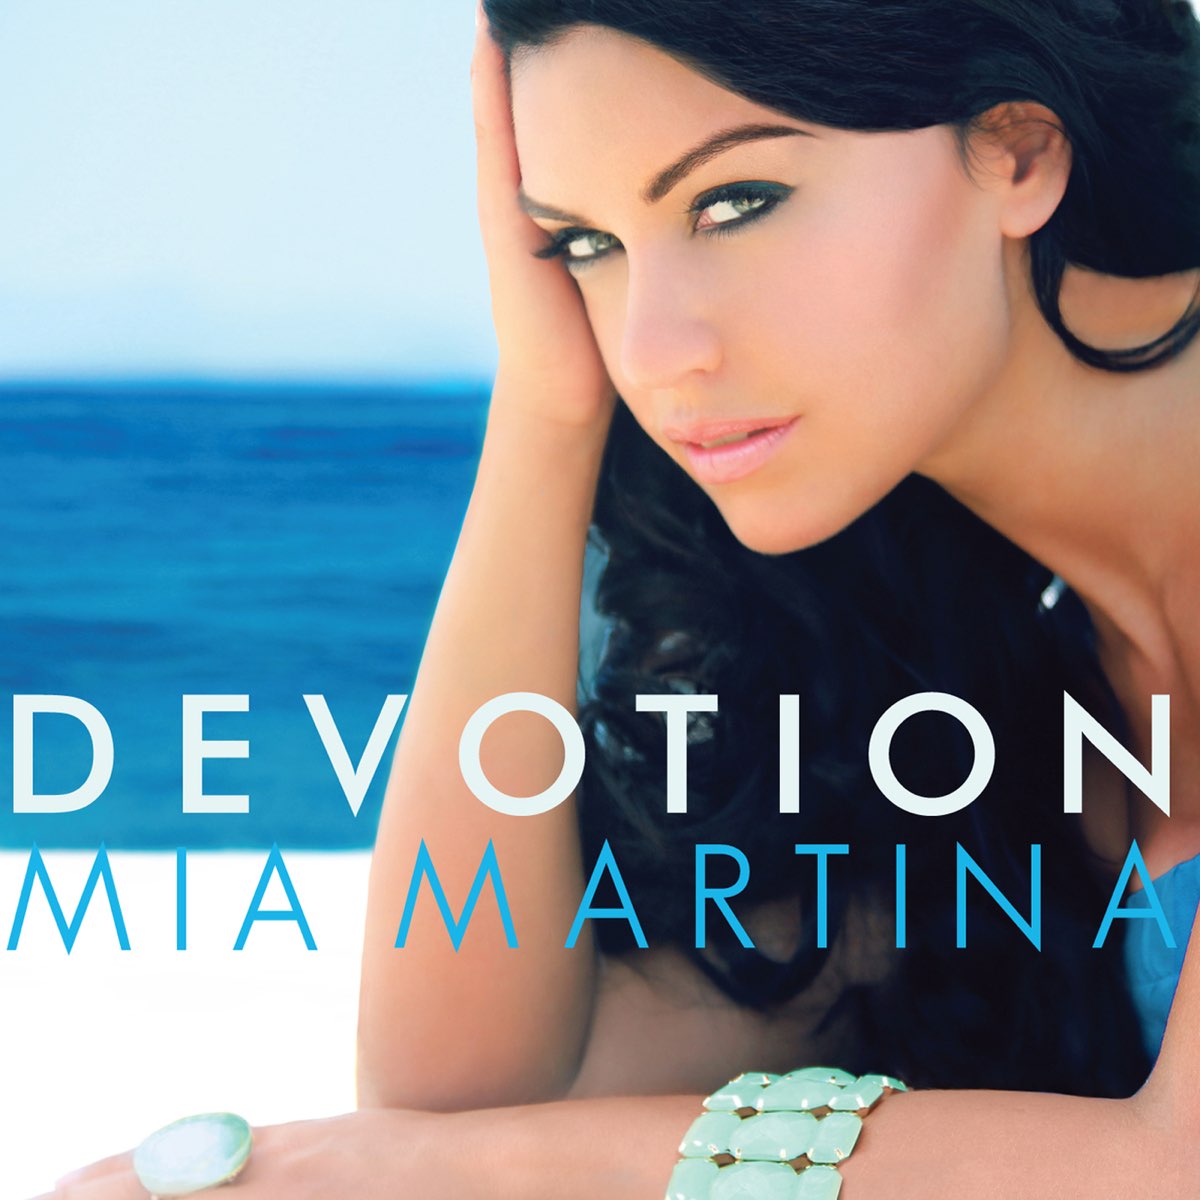 ‎Devotion by Mia Martina on Apple Music